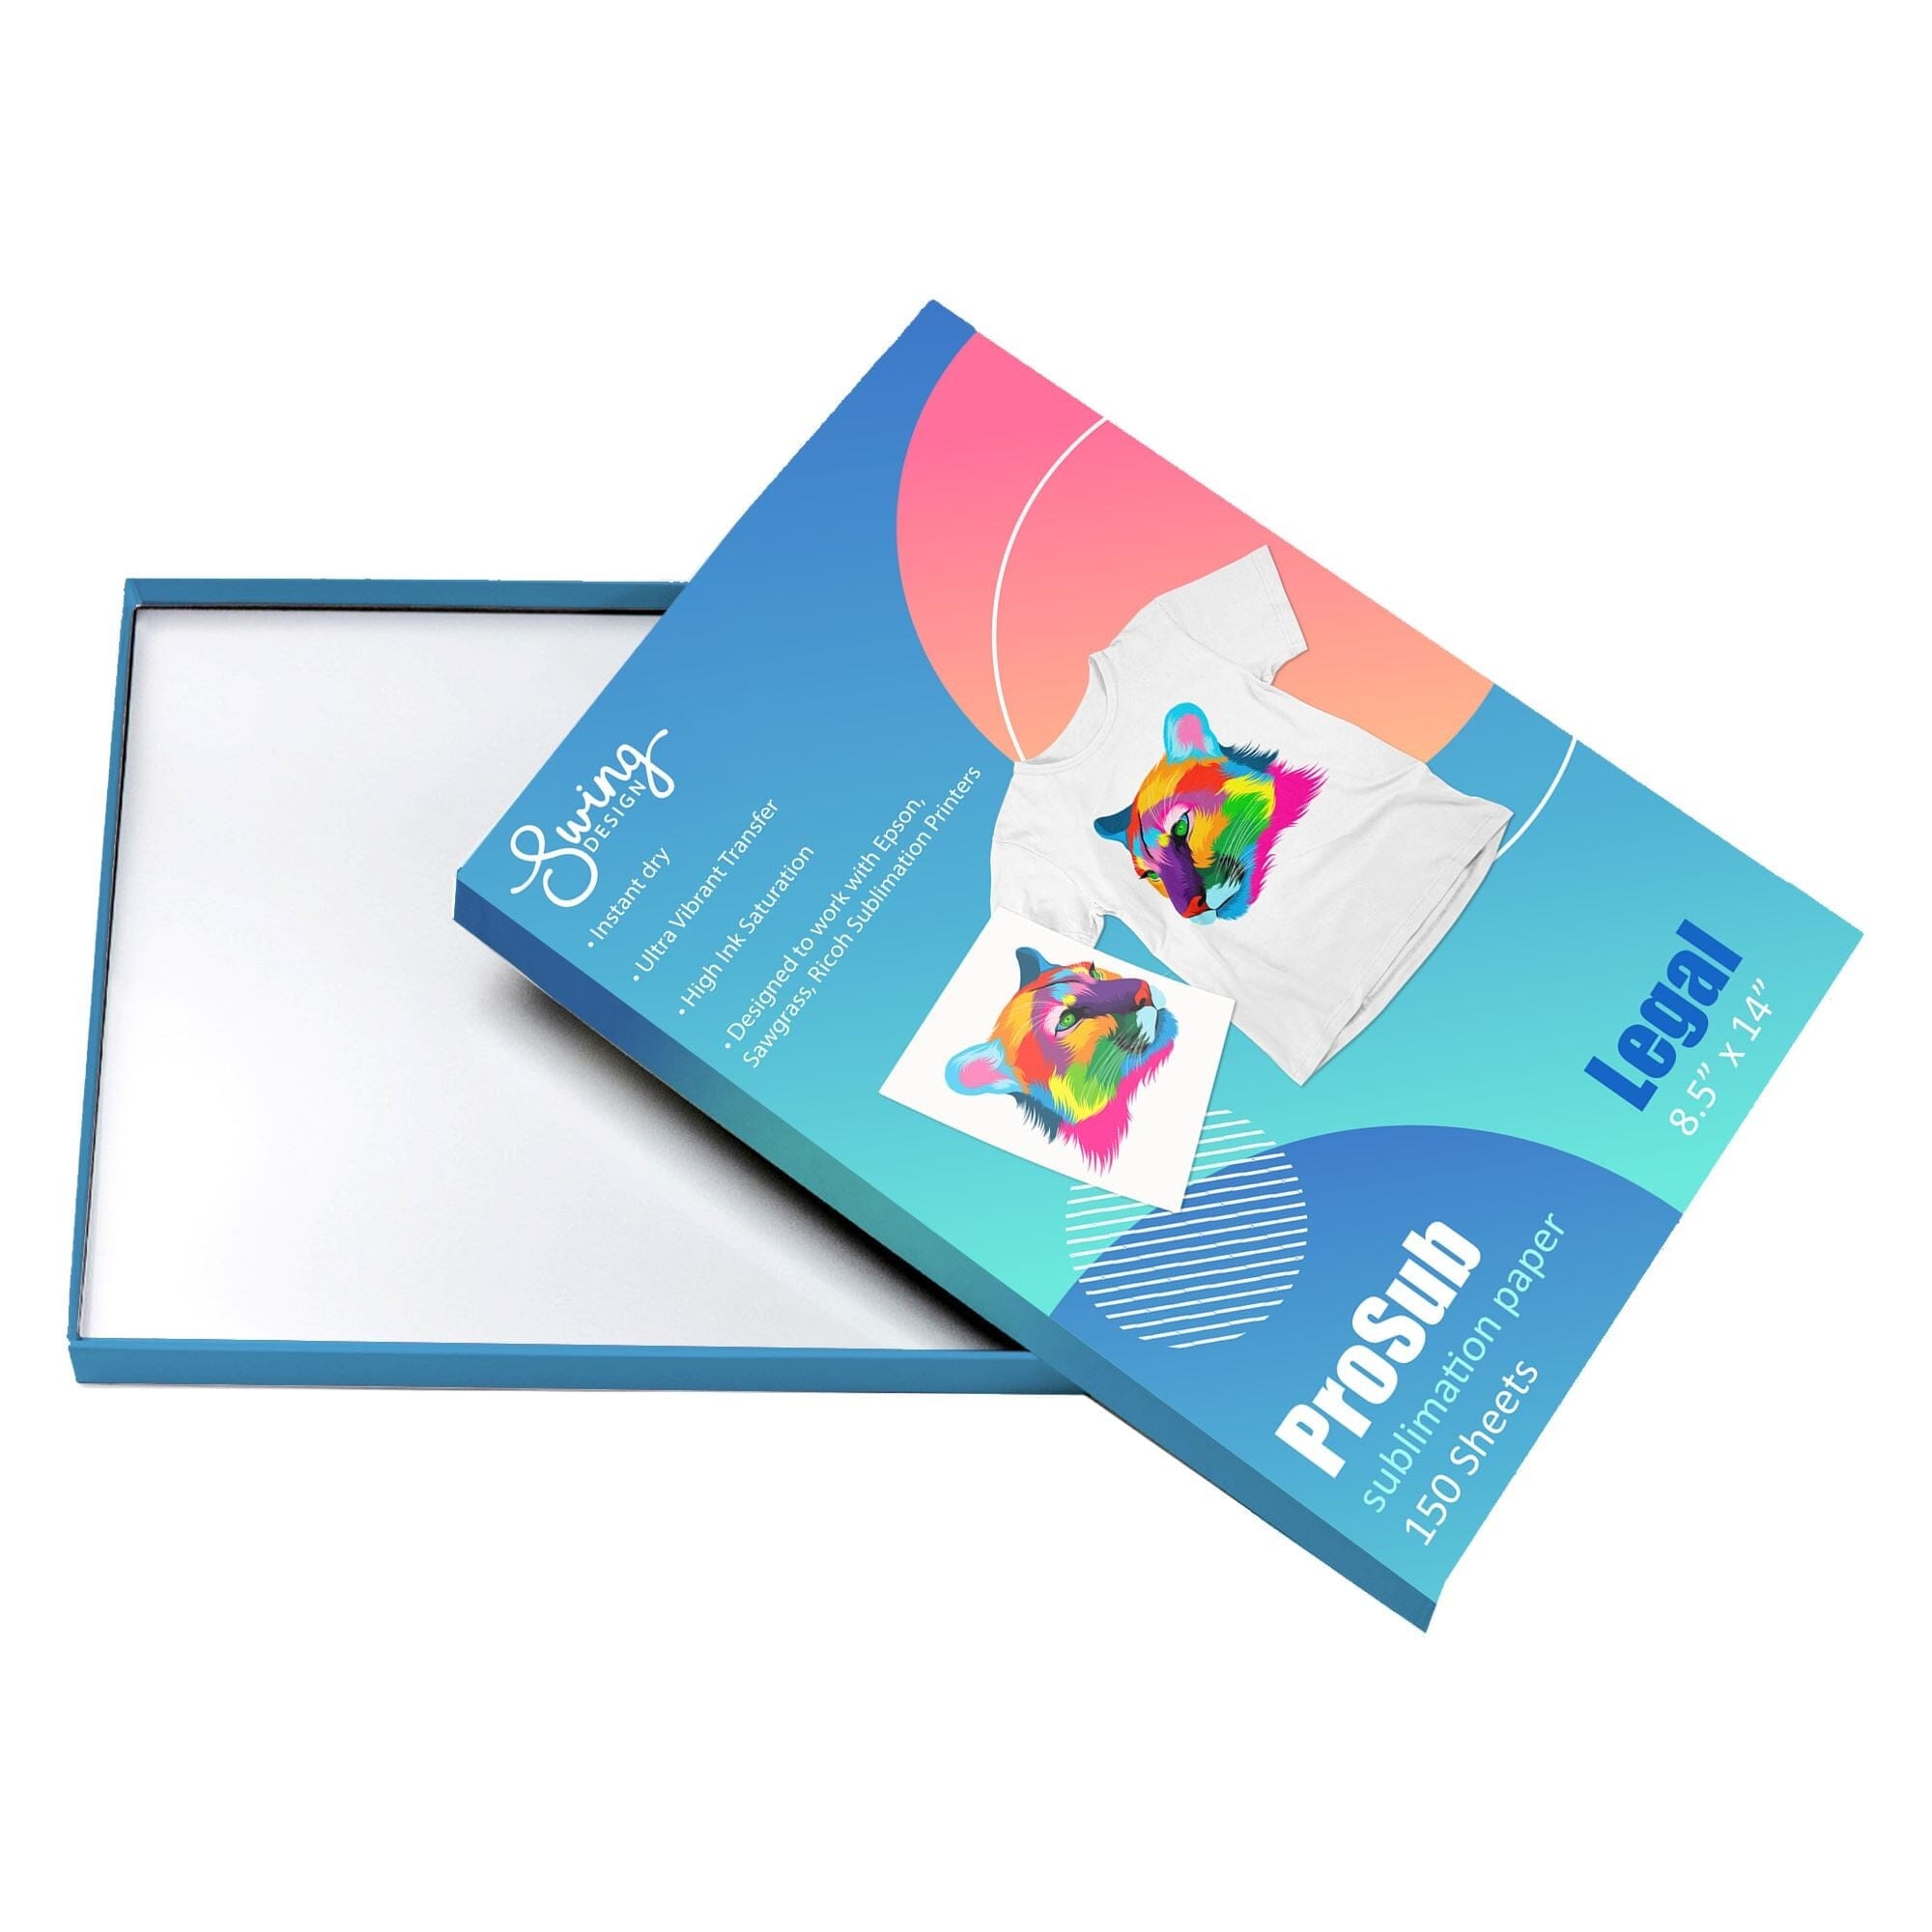 Sawgrass UHD Virtuoso SG500 Sublimation Color Printer Starter Bundle with  Paper, Inks, Blanks, Designs